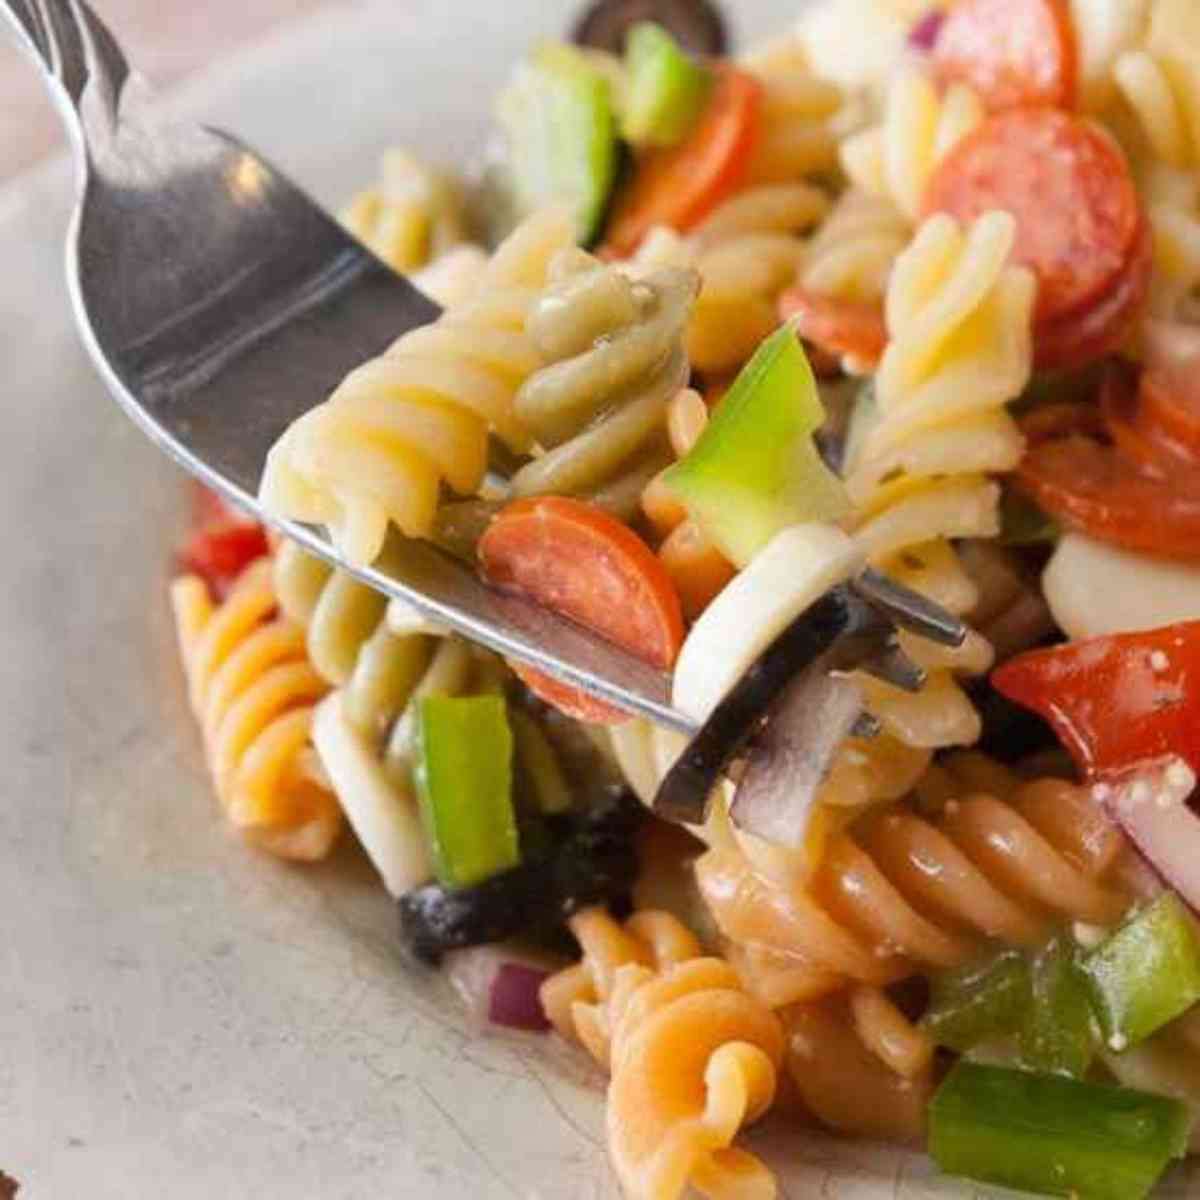 Forkful of italian pasta salad.